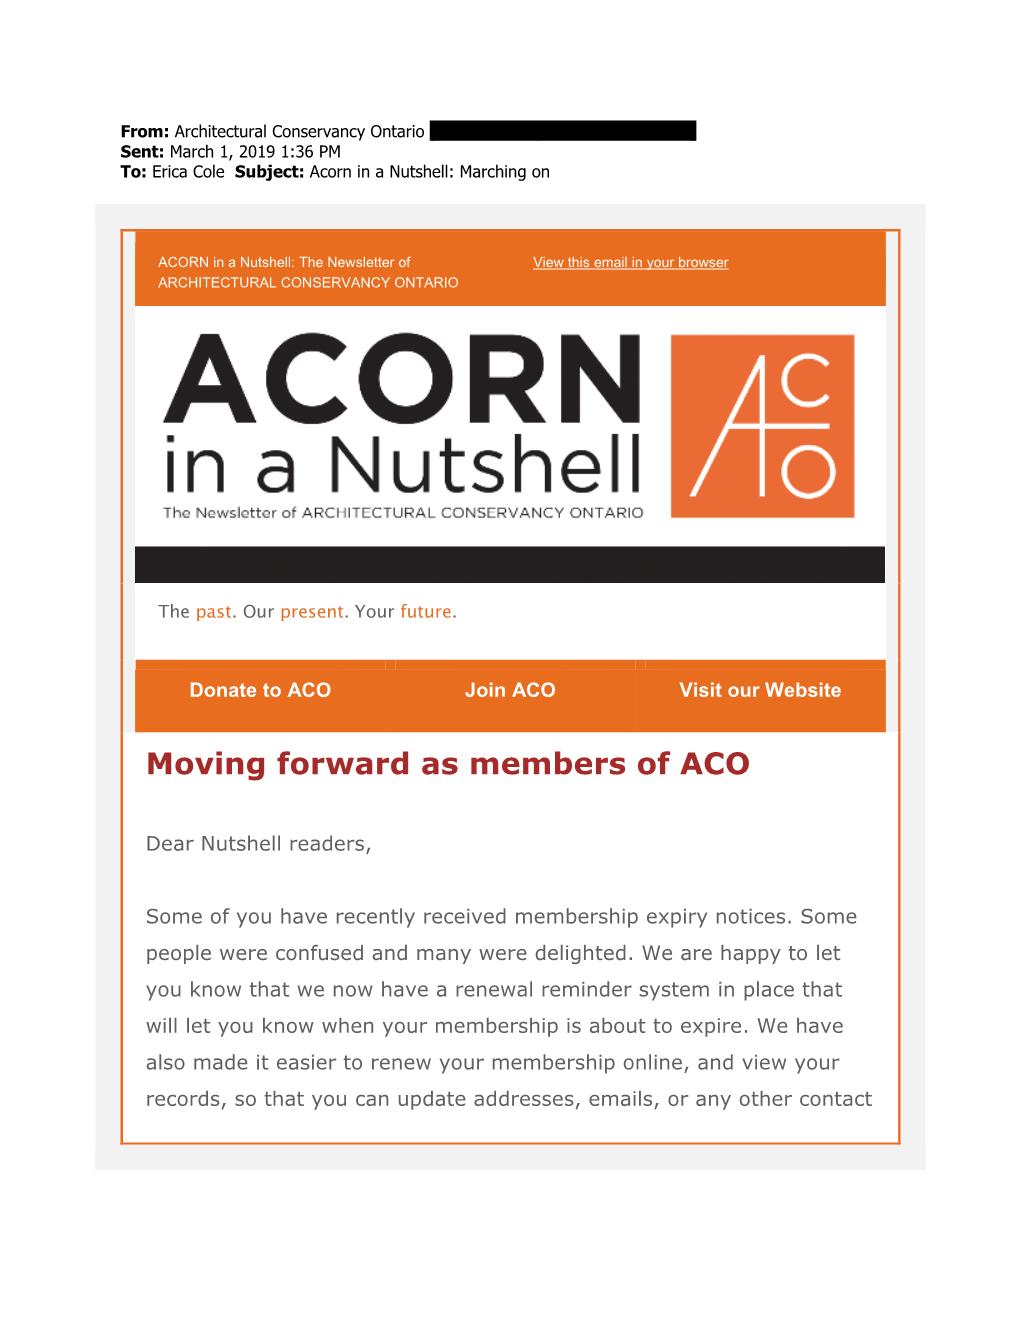 Moving Forward As Members of ACO